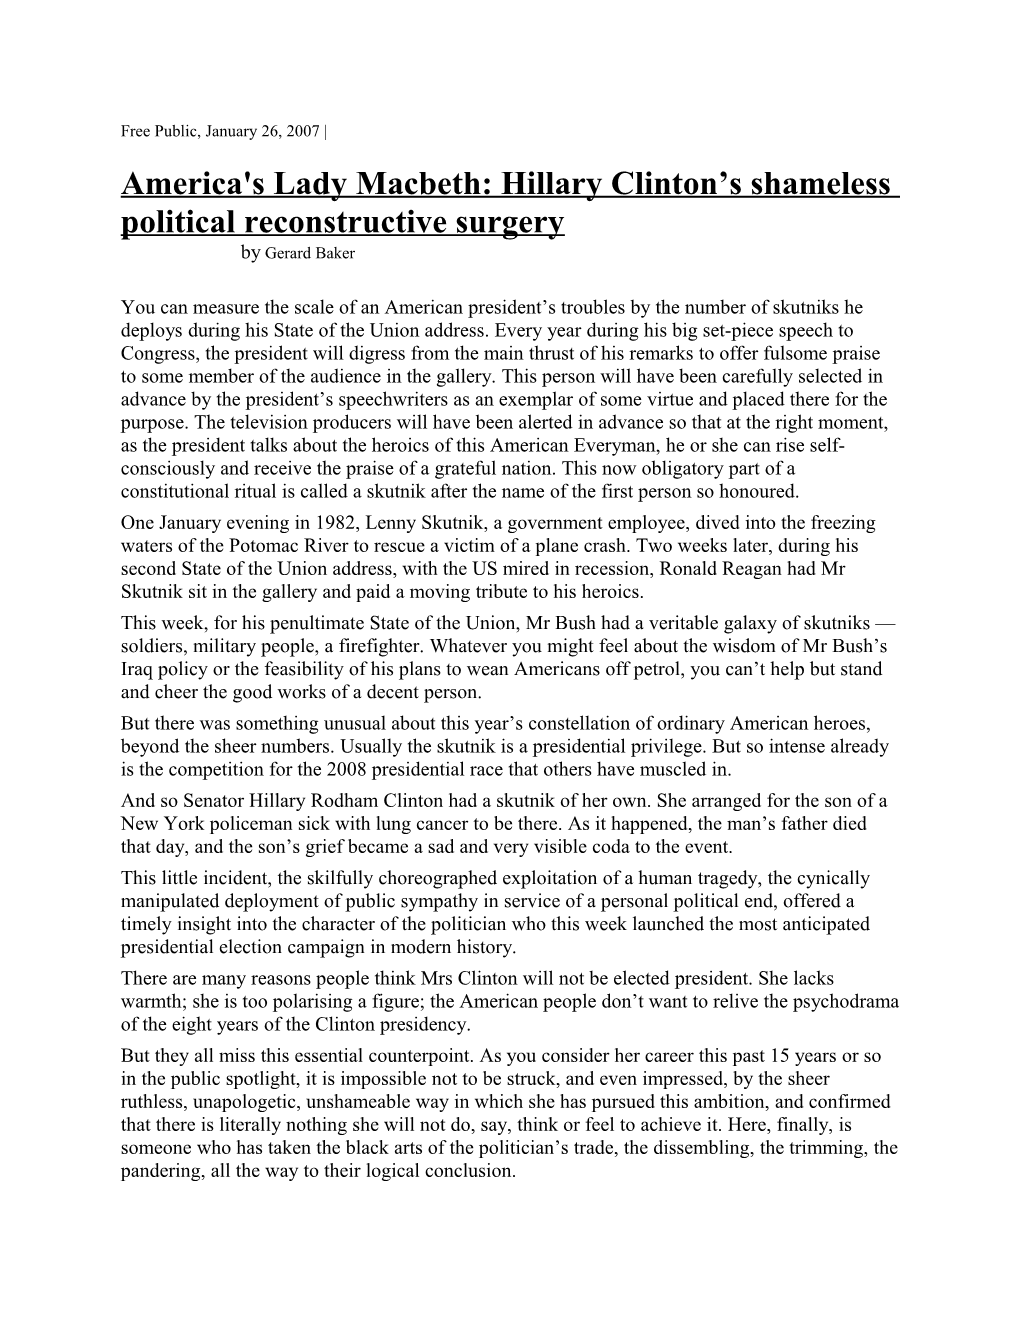 America's Lady Macbeth: Hillary Clinton S Shameless Political Reconstructive Surgery